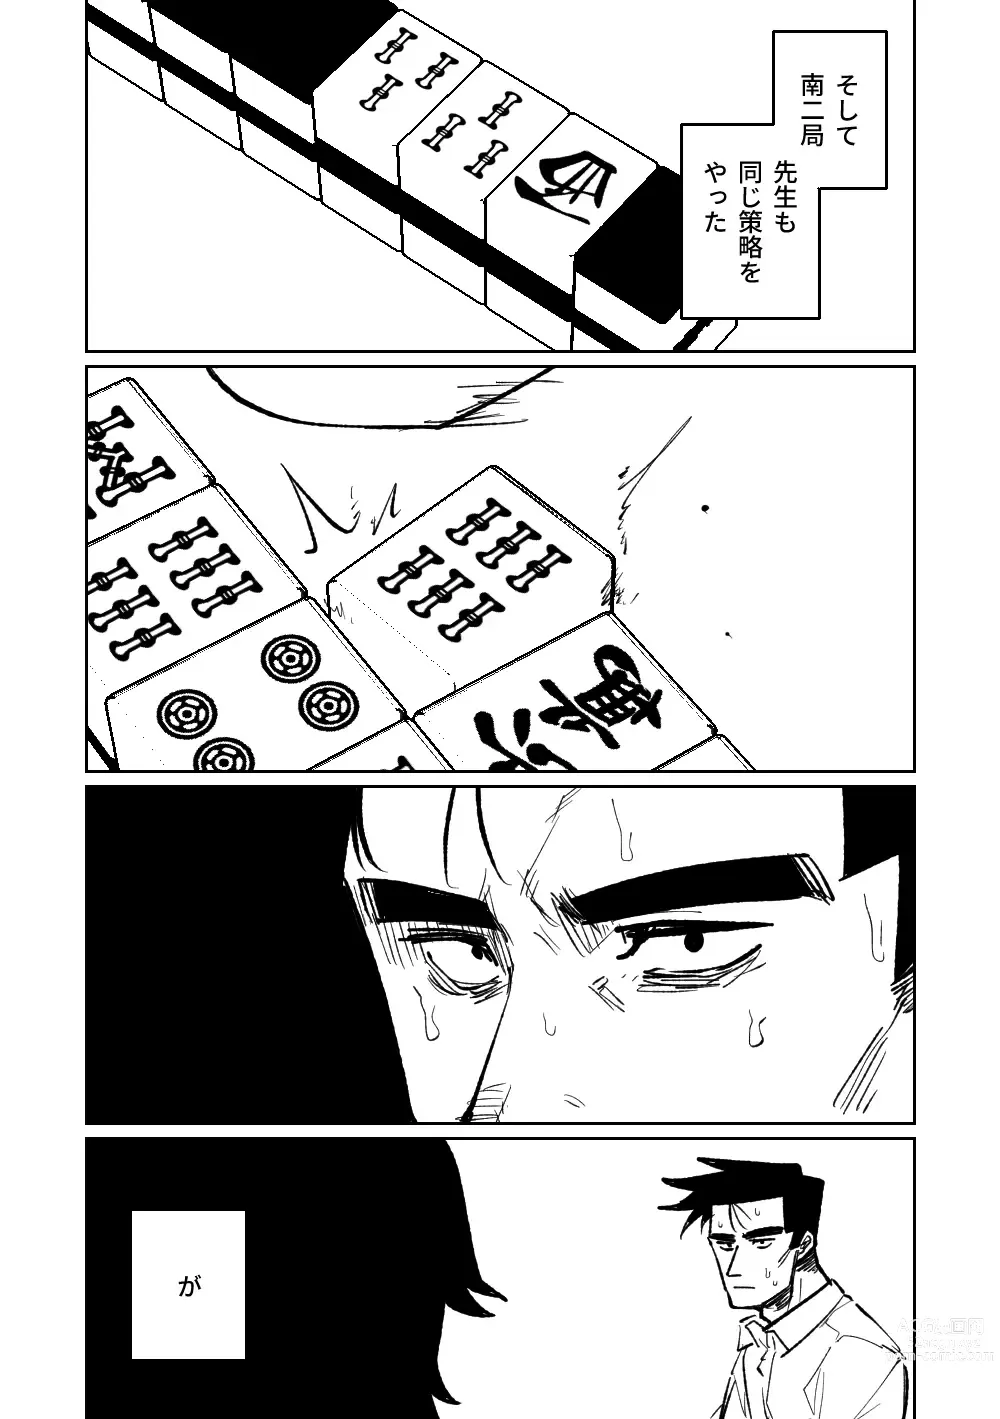 Page 182 of doujinshi Benriya 68 Datsui Mahjong Ichi ~Sankaisen~